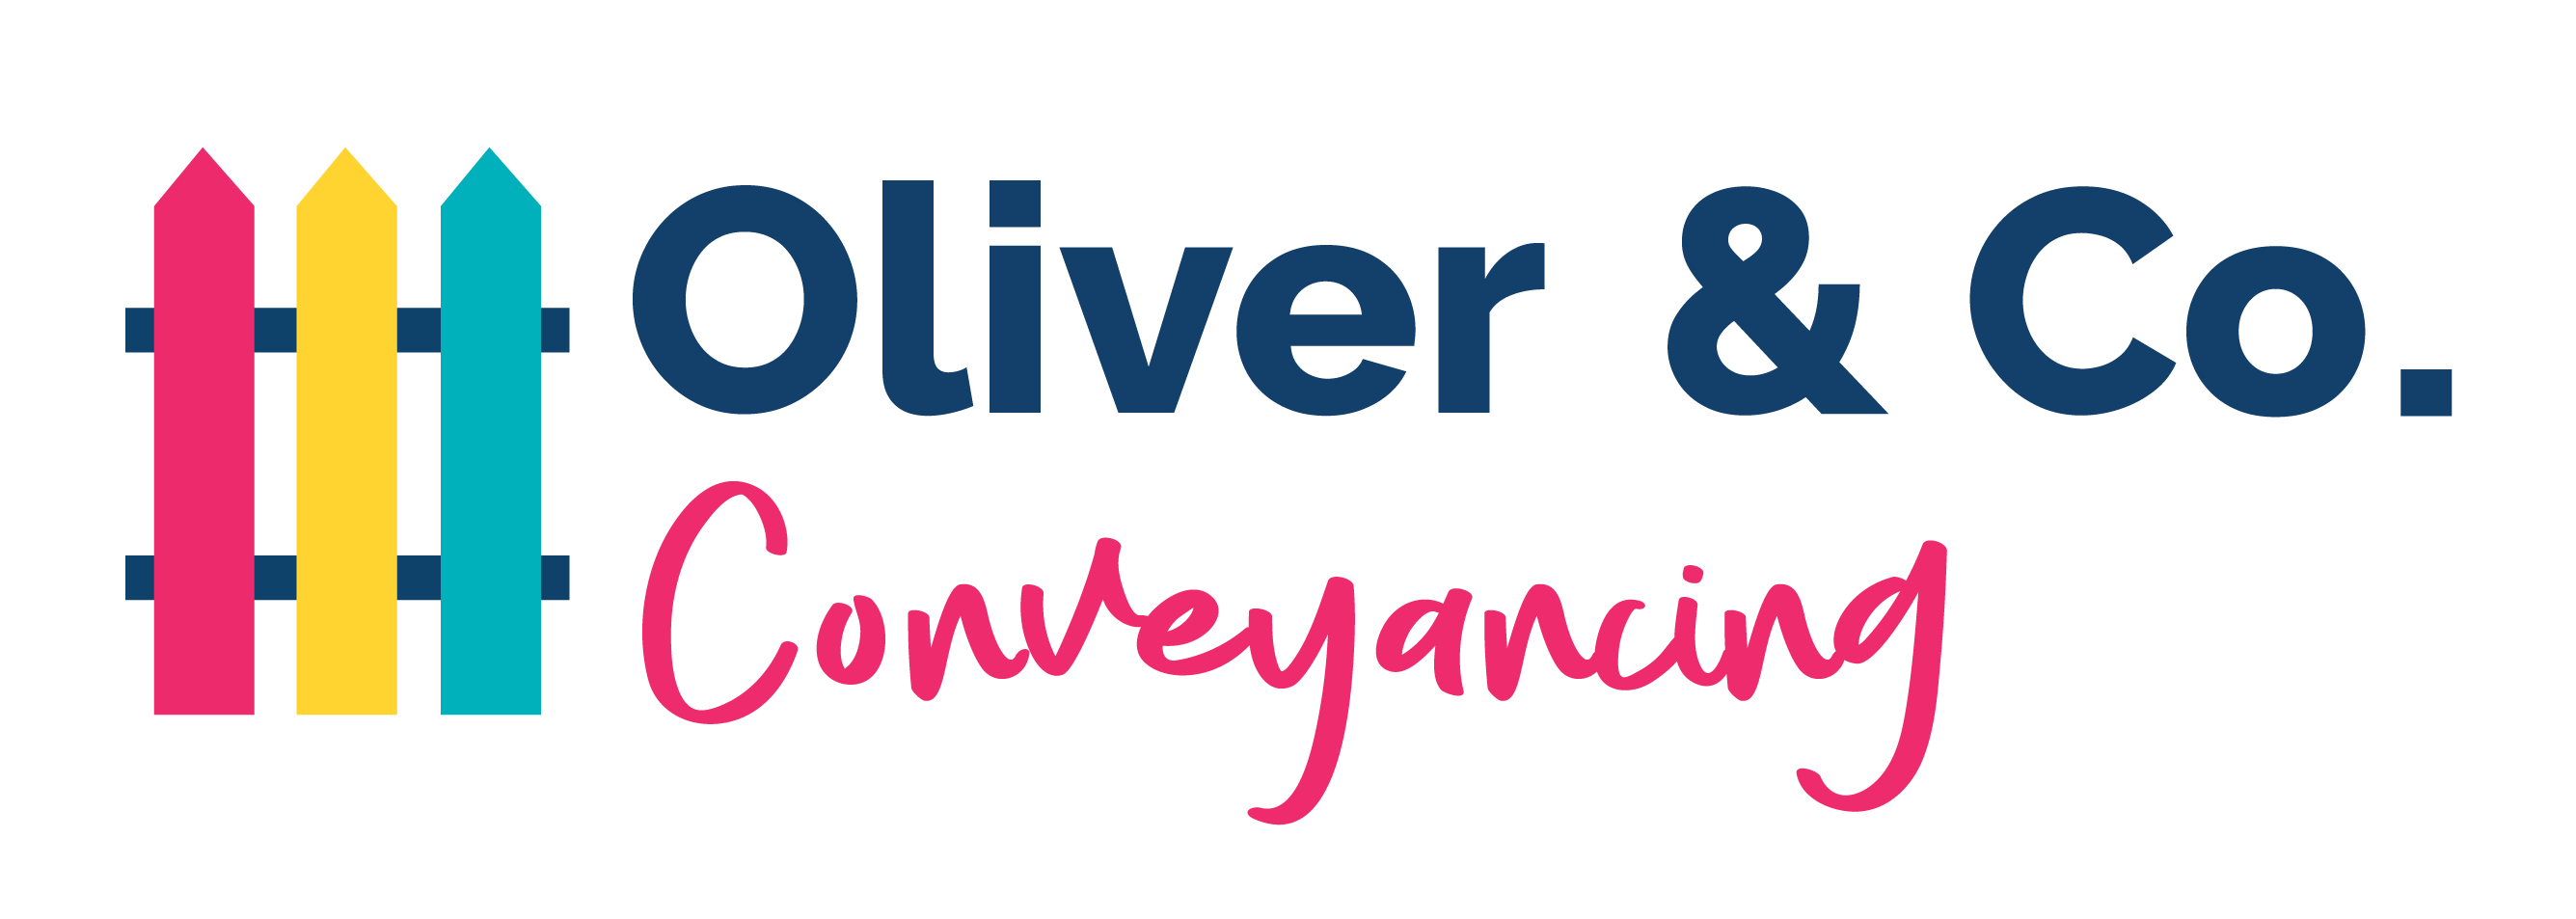 Conveyancer Hunter Valley - Oliver & Co. Conveyancing